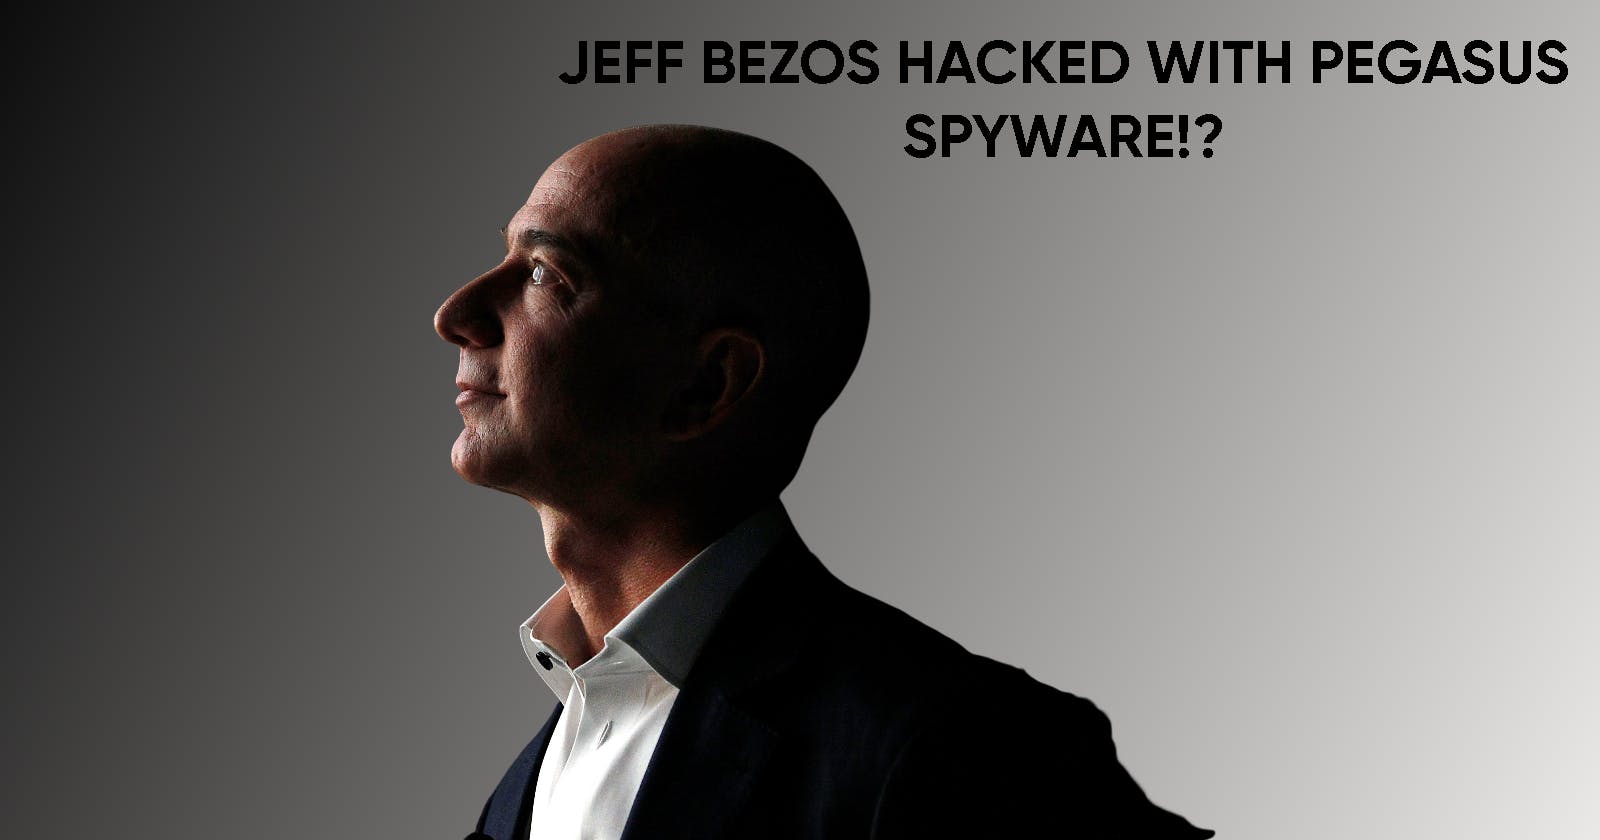 Pegasus Spyware, Hacked Jeff Bezos!?